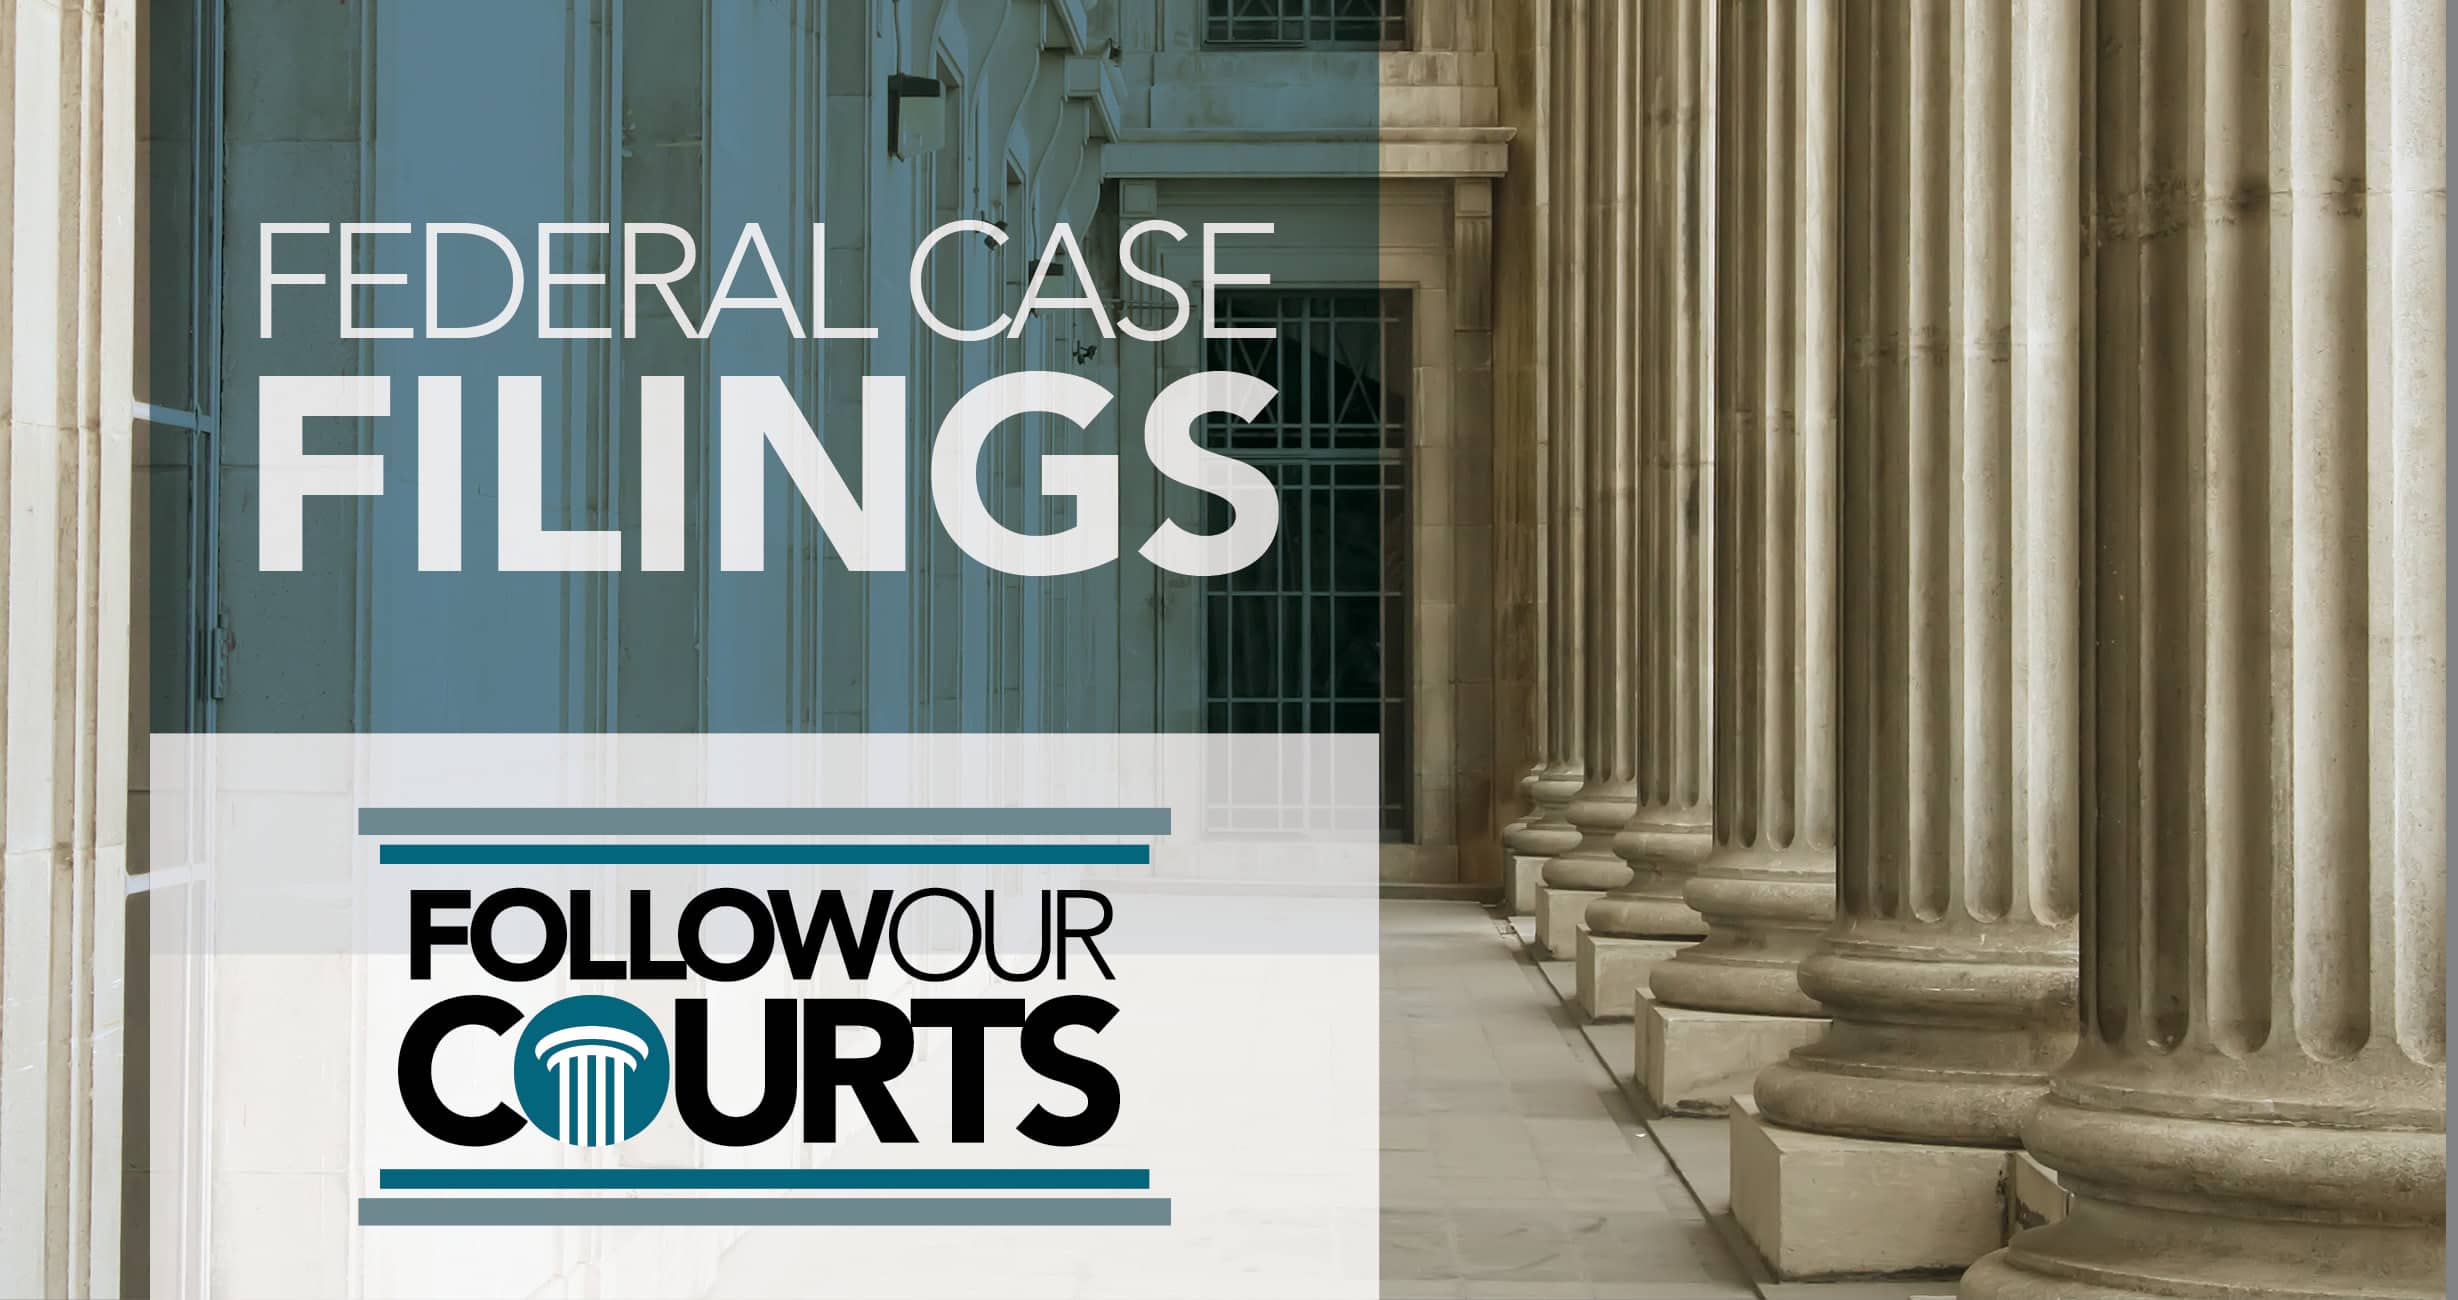 Federal case filings Sept. 11-15